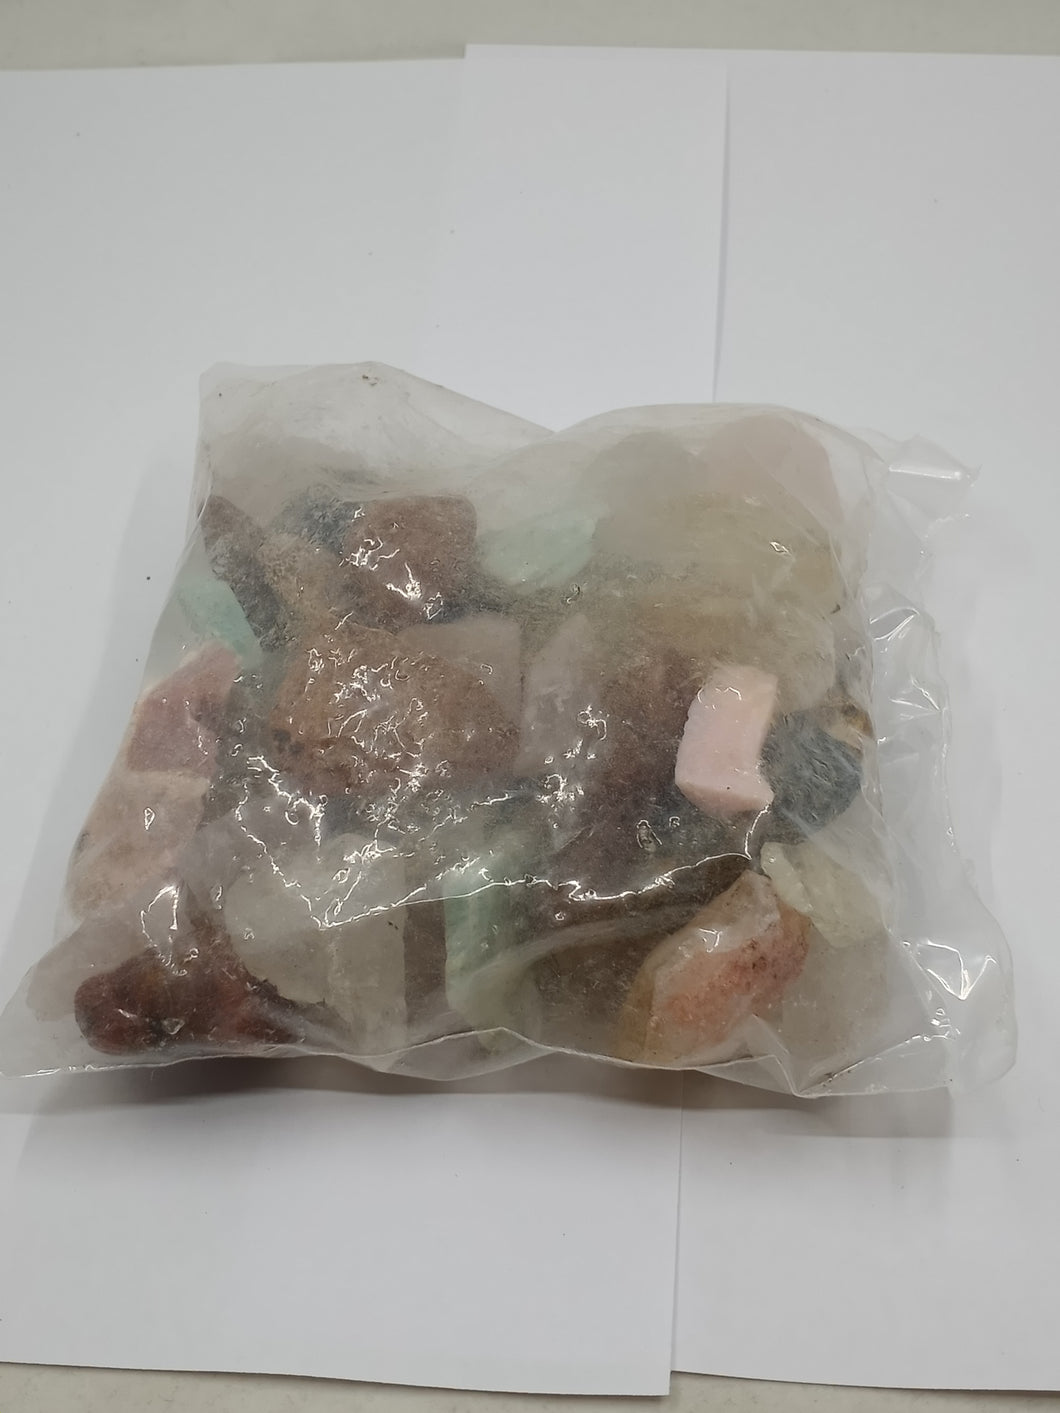 Mixed Gemstone Chips Raw 500g bag